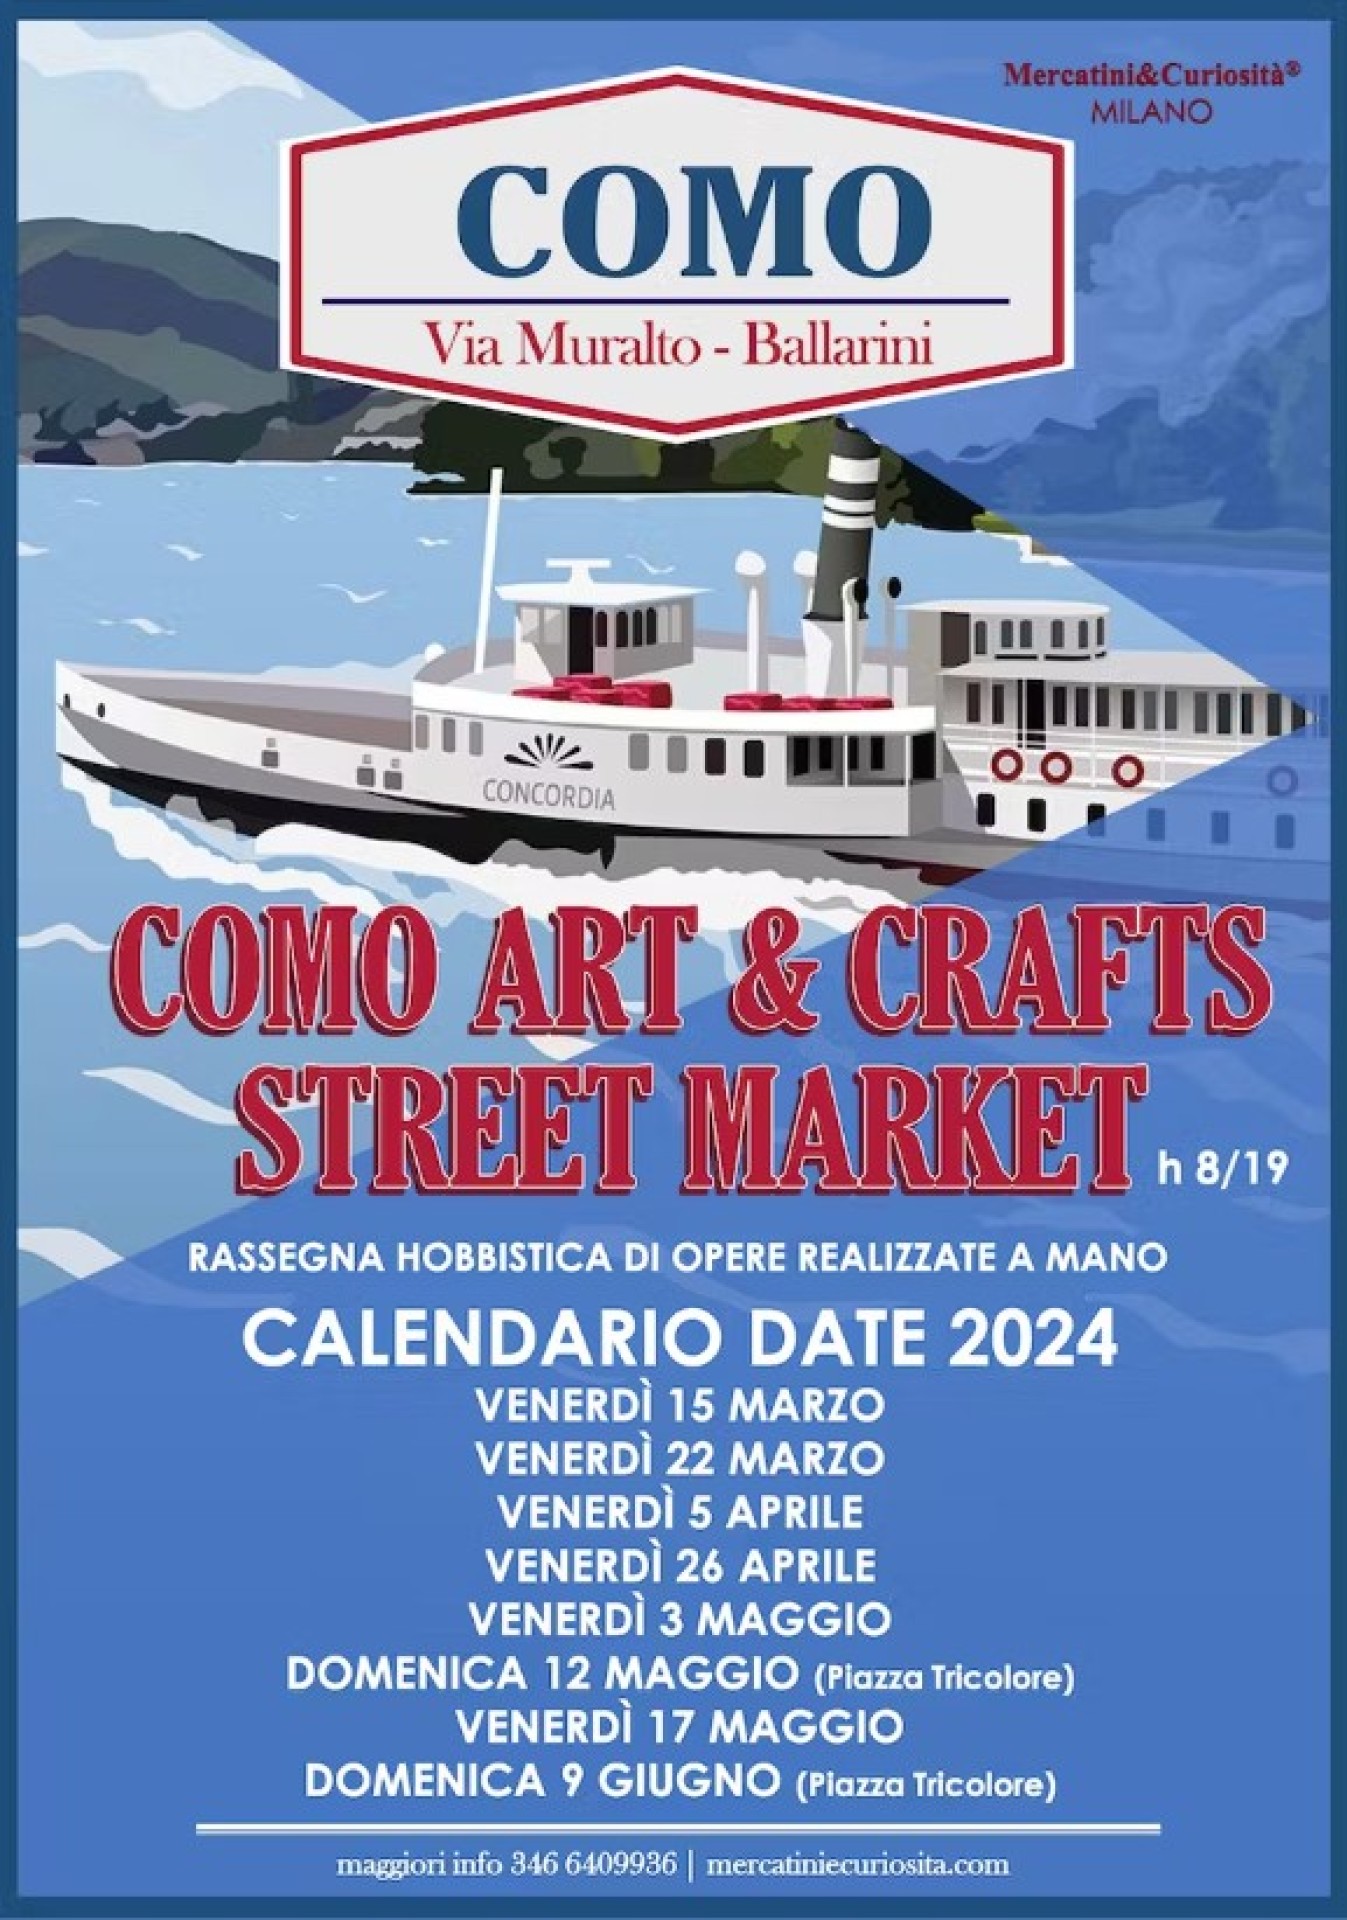 COMO ART & CRAFTS STREET MARKET 2024